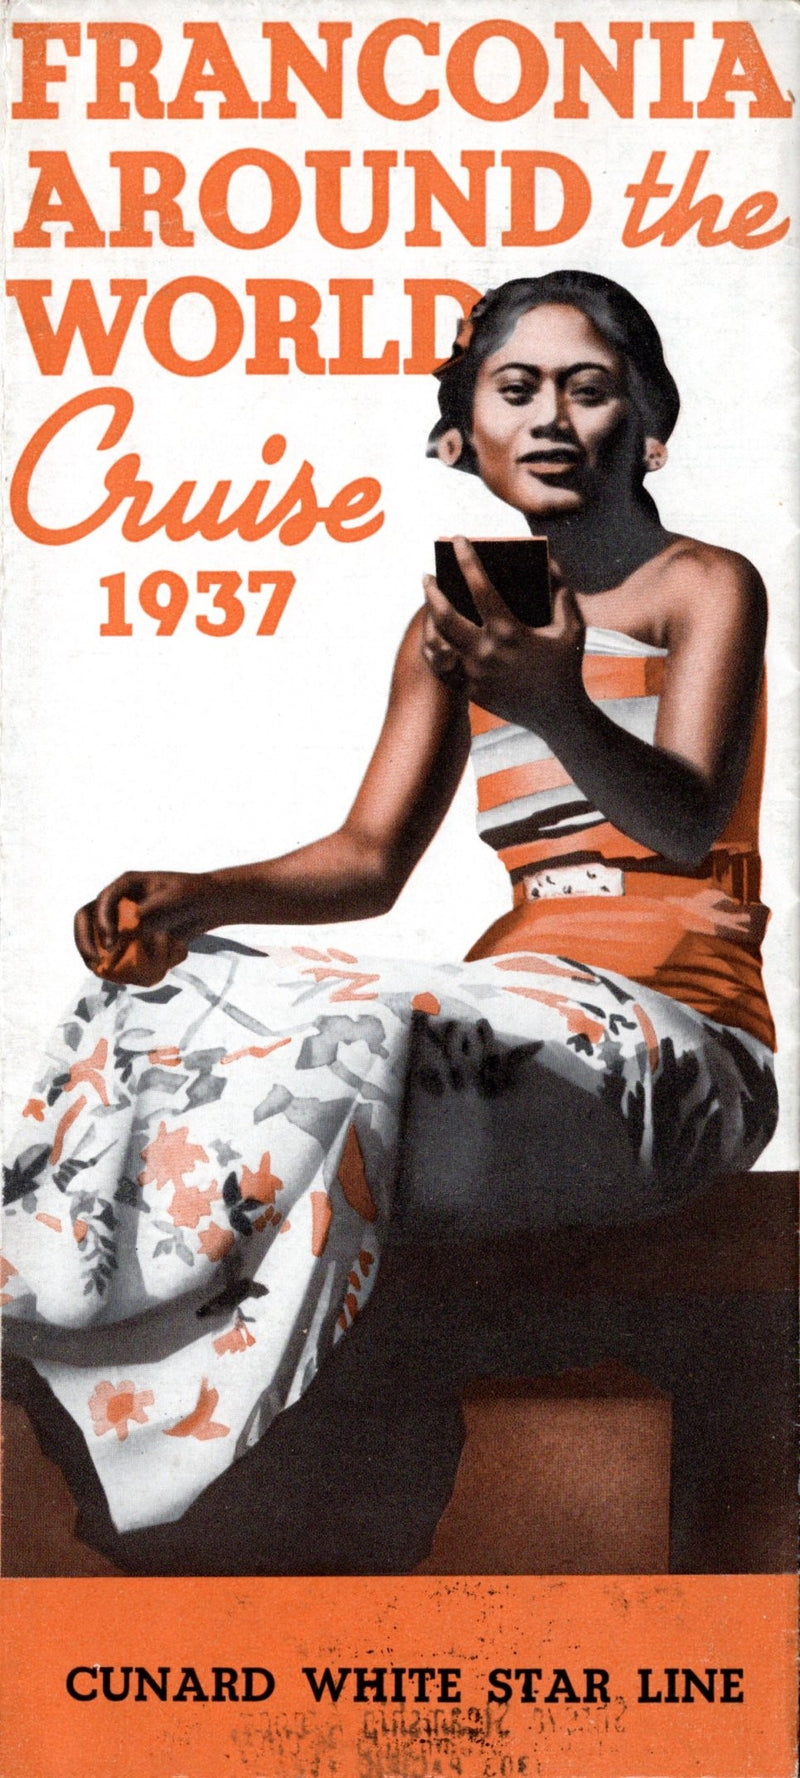 FRANCONIA: 1923 - Around the World brochure w/ plans & interiors 1937